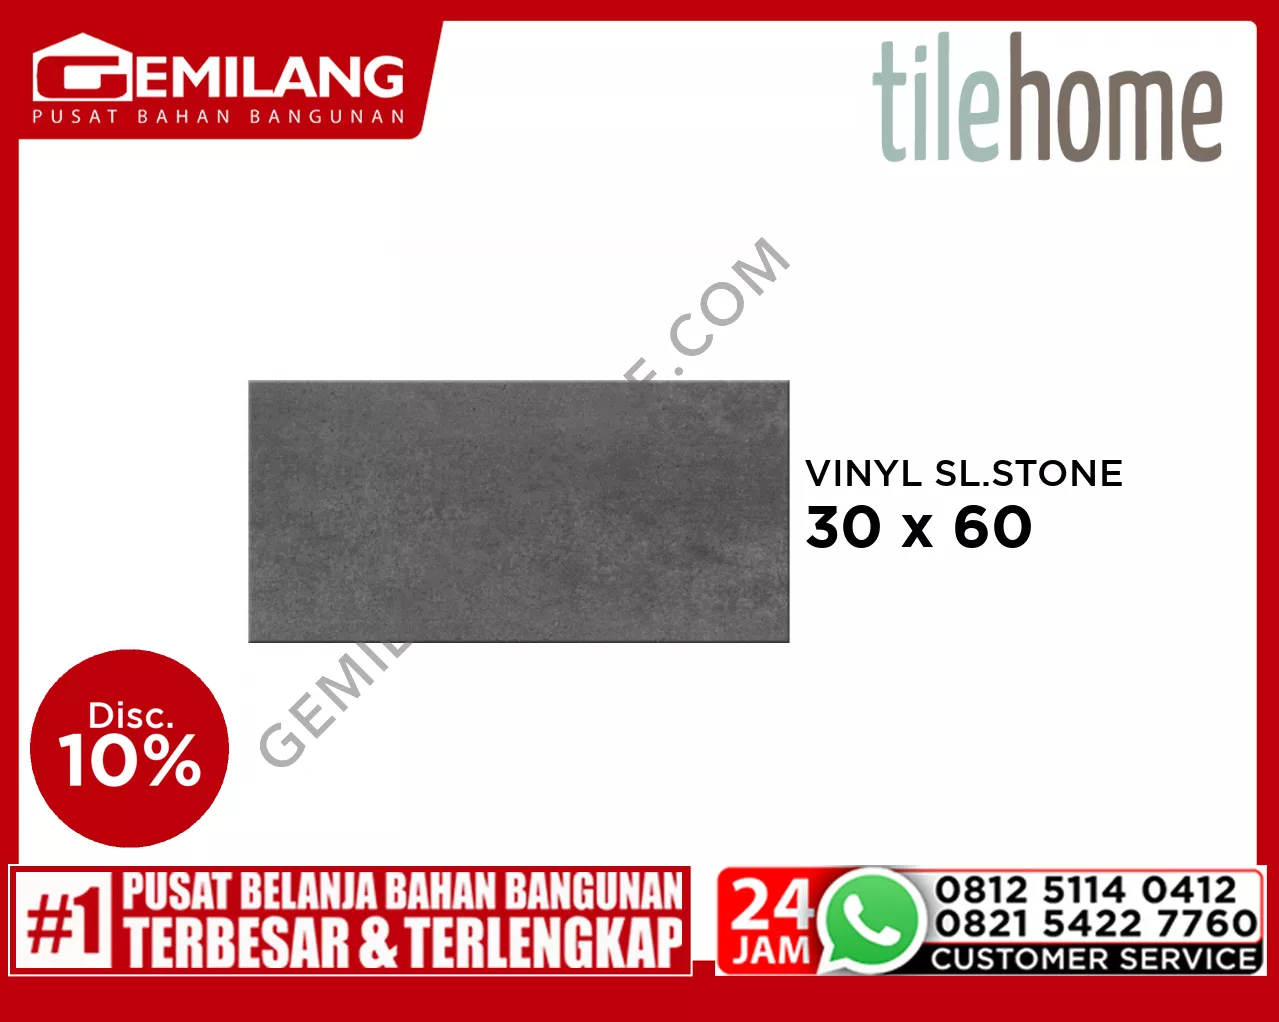 TILEHOME VINYL LVT SLATE STONE MTH-042 30.4 x 60.9 x 0.3cm (14pc)